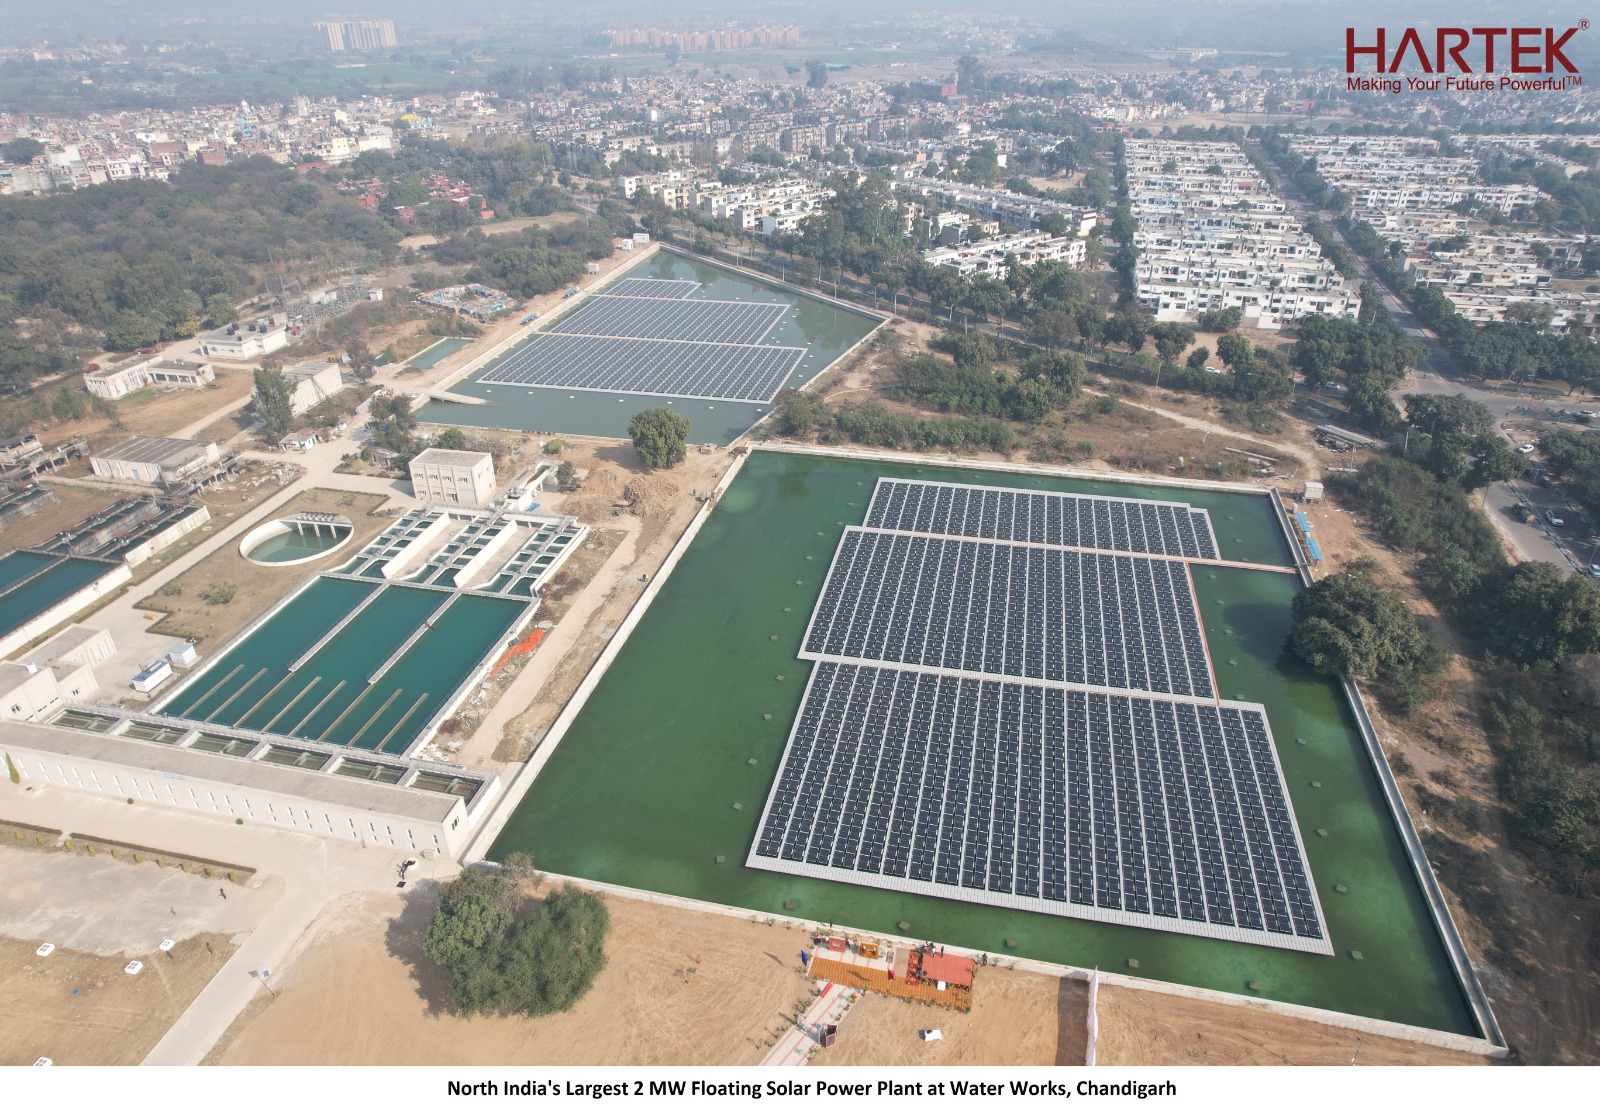 Hartek Solar bags 22 MW floating solar project from SJVN Green